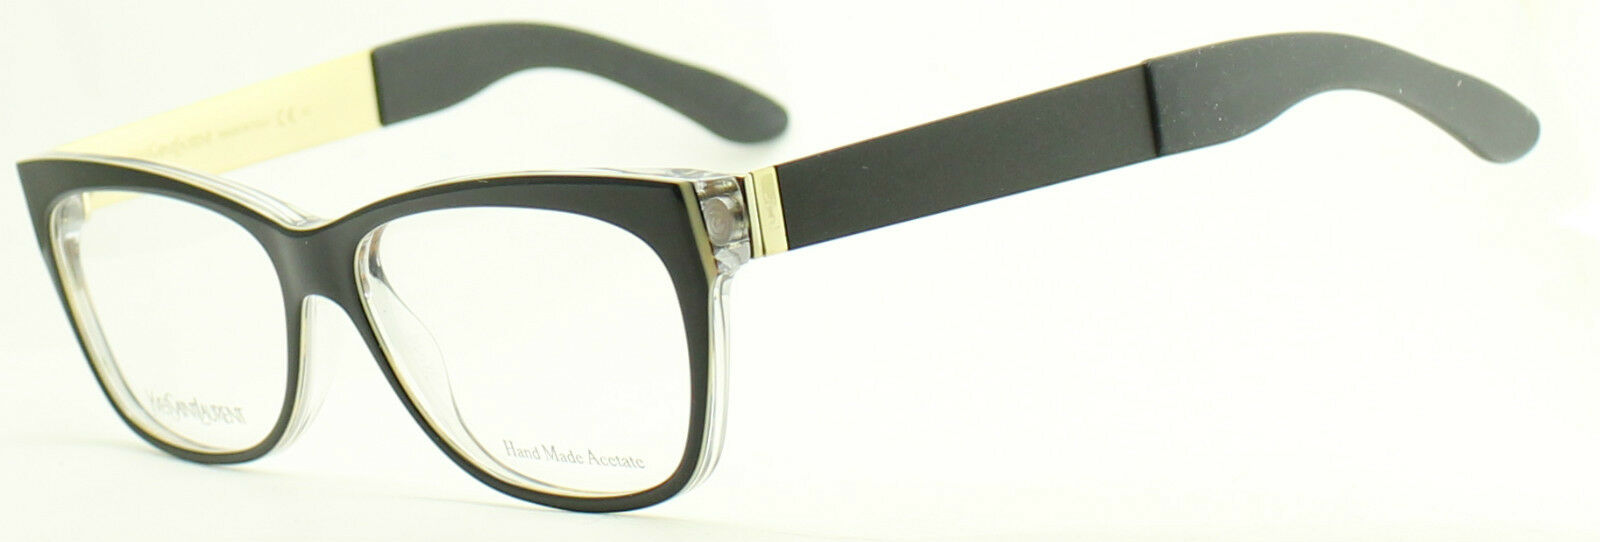 Yves Saint Laurent YSL 6367 4FV Eyewear FRAMES RX Optical Eyeglasses Glasses-New  - GGV Eyewear